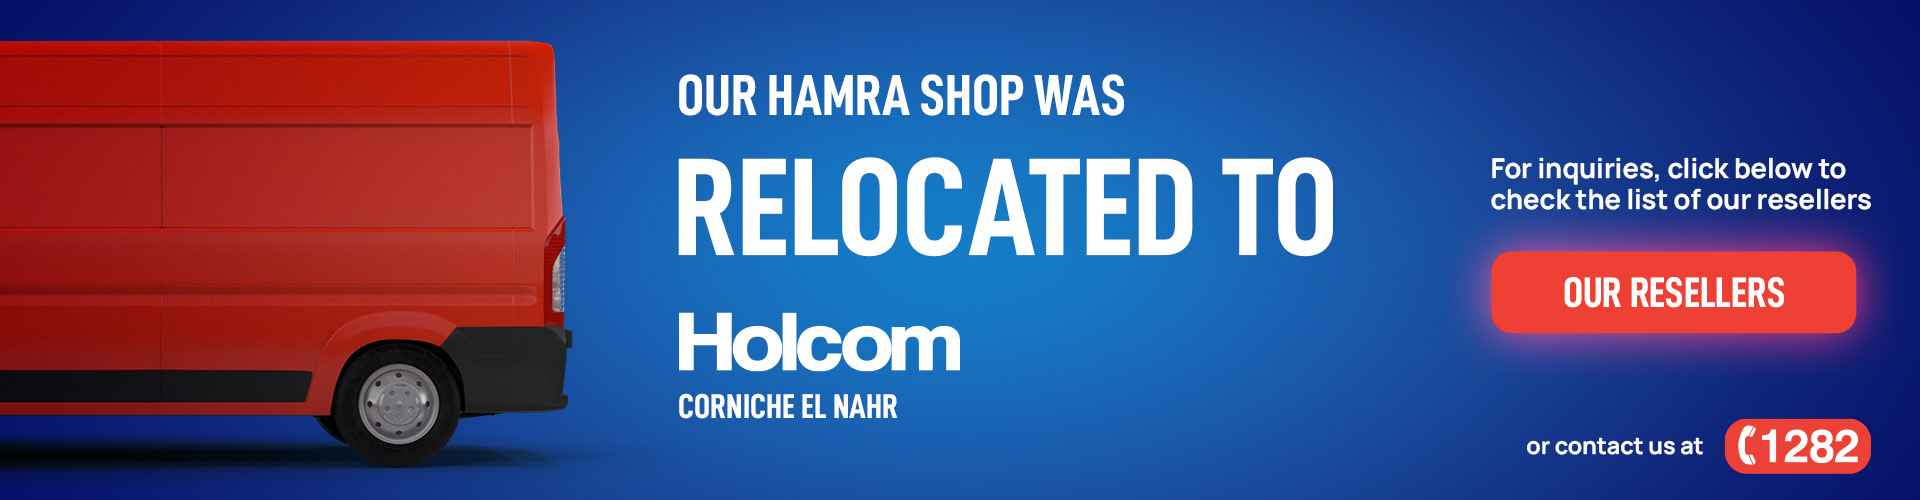 IDM shop has moved to Corniche el Nahr